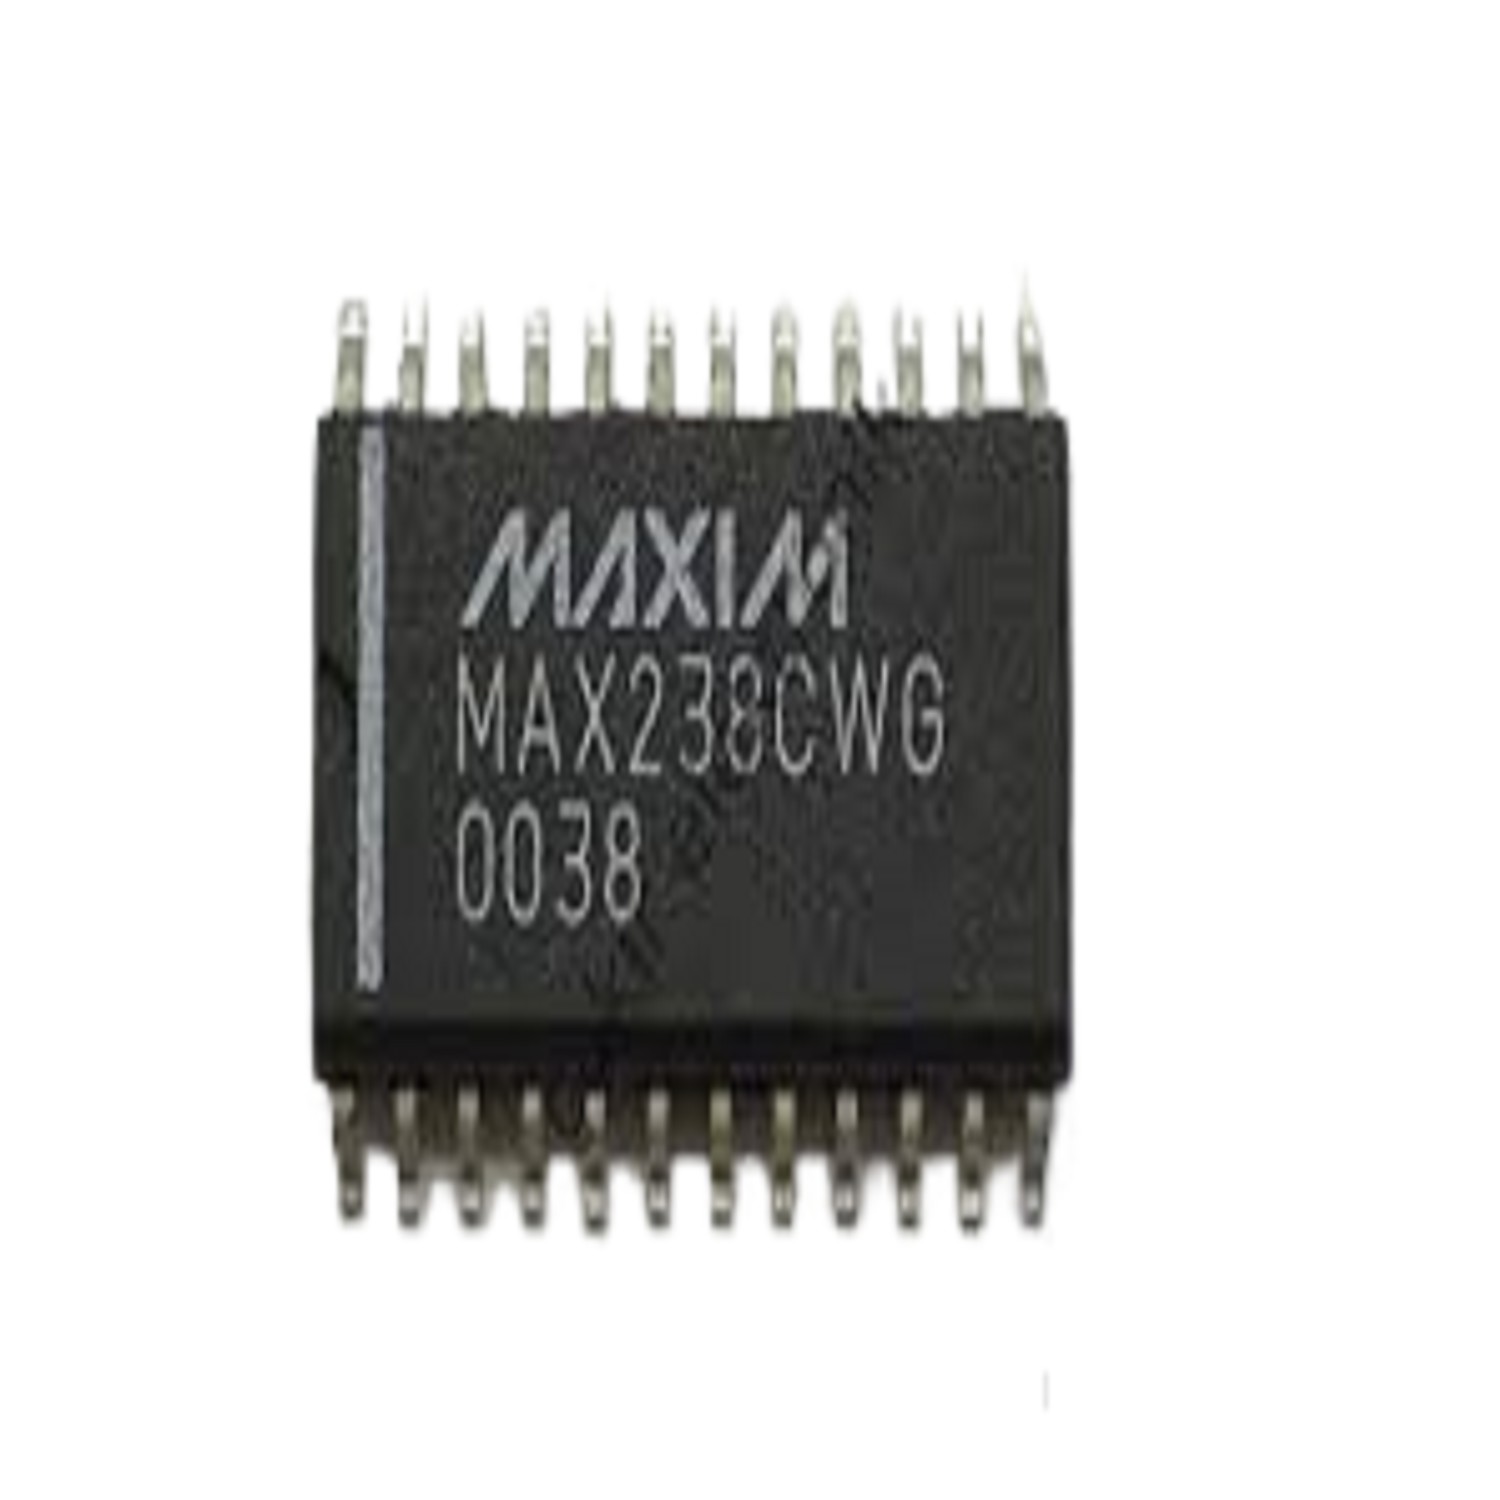 MAX238CWG SMD CIRCUITO INTEGRADO